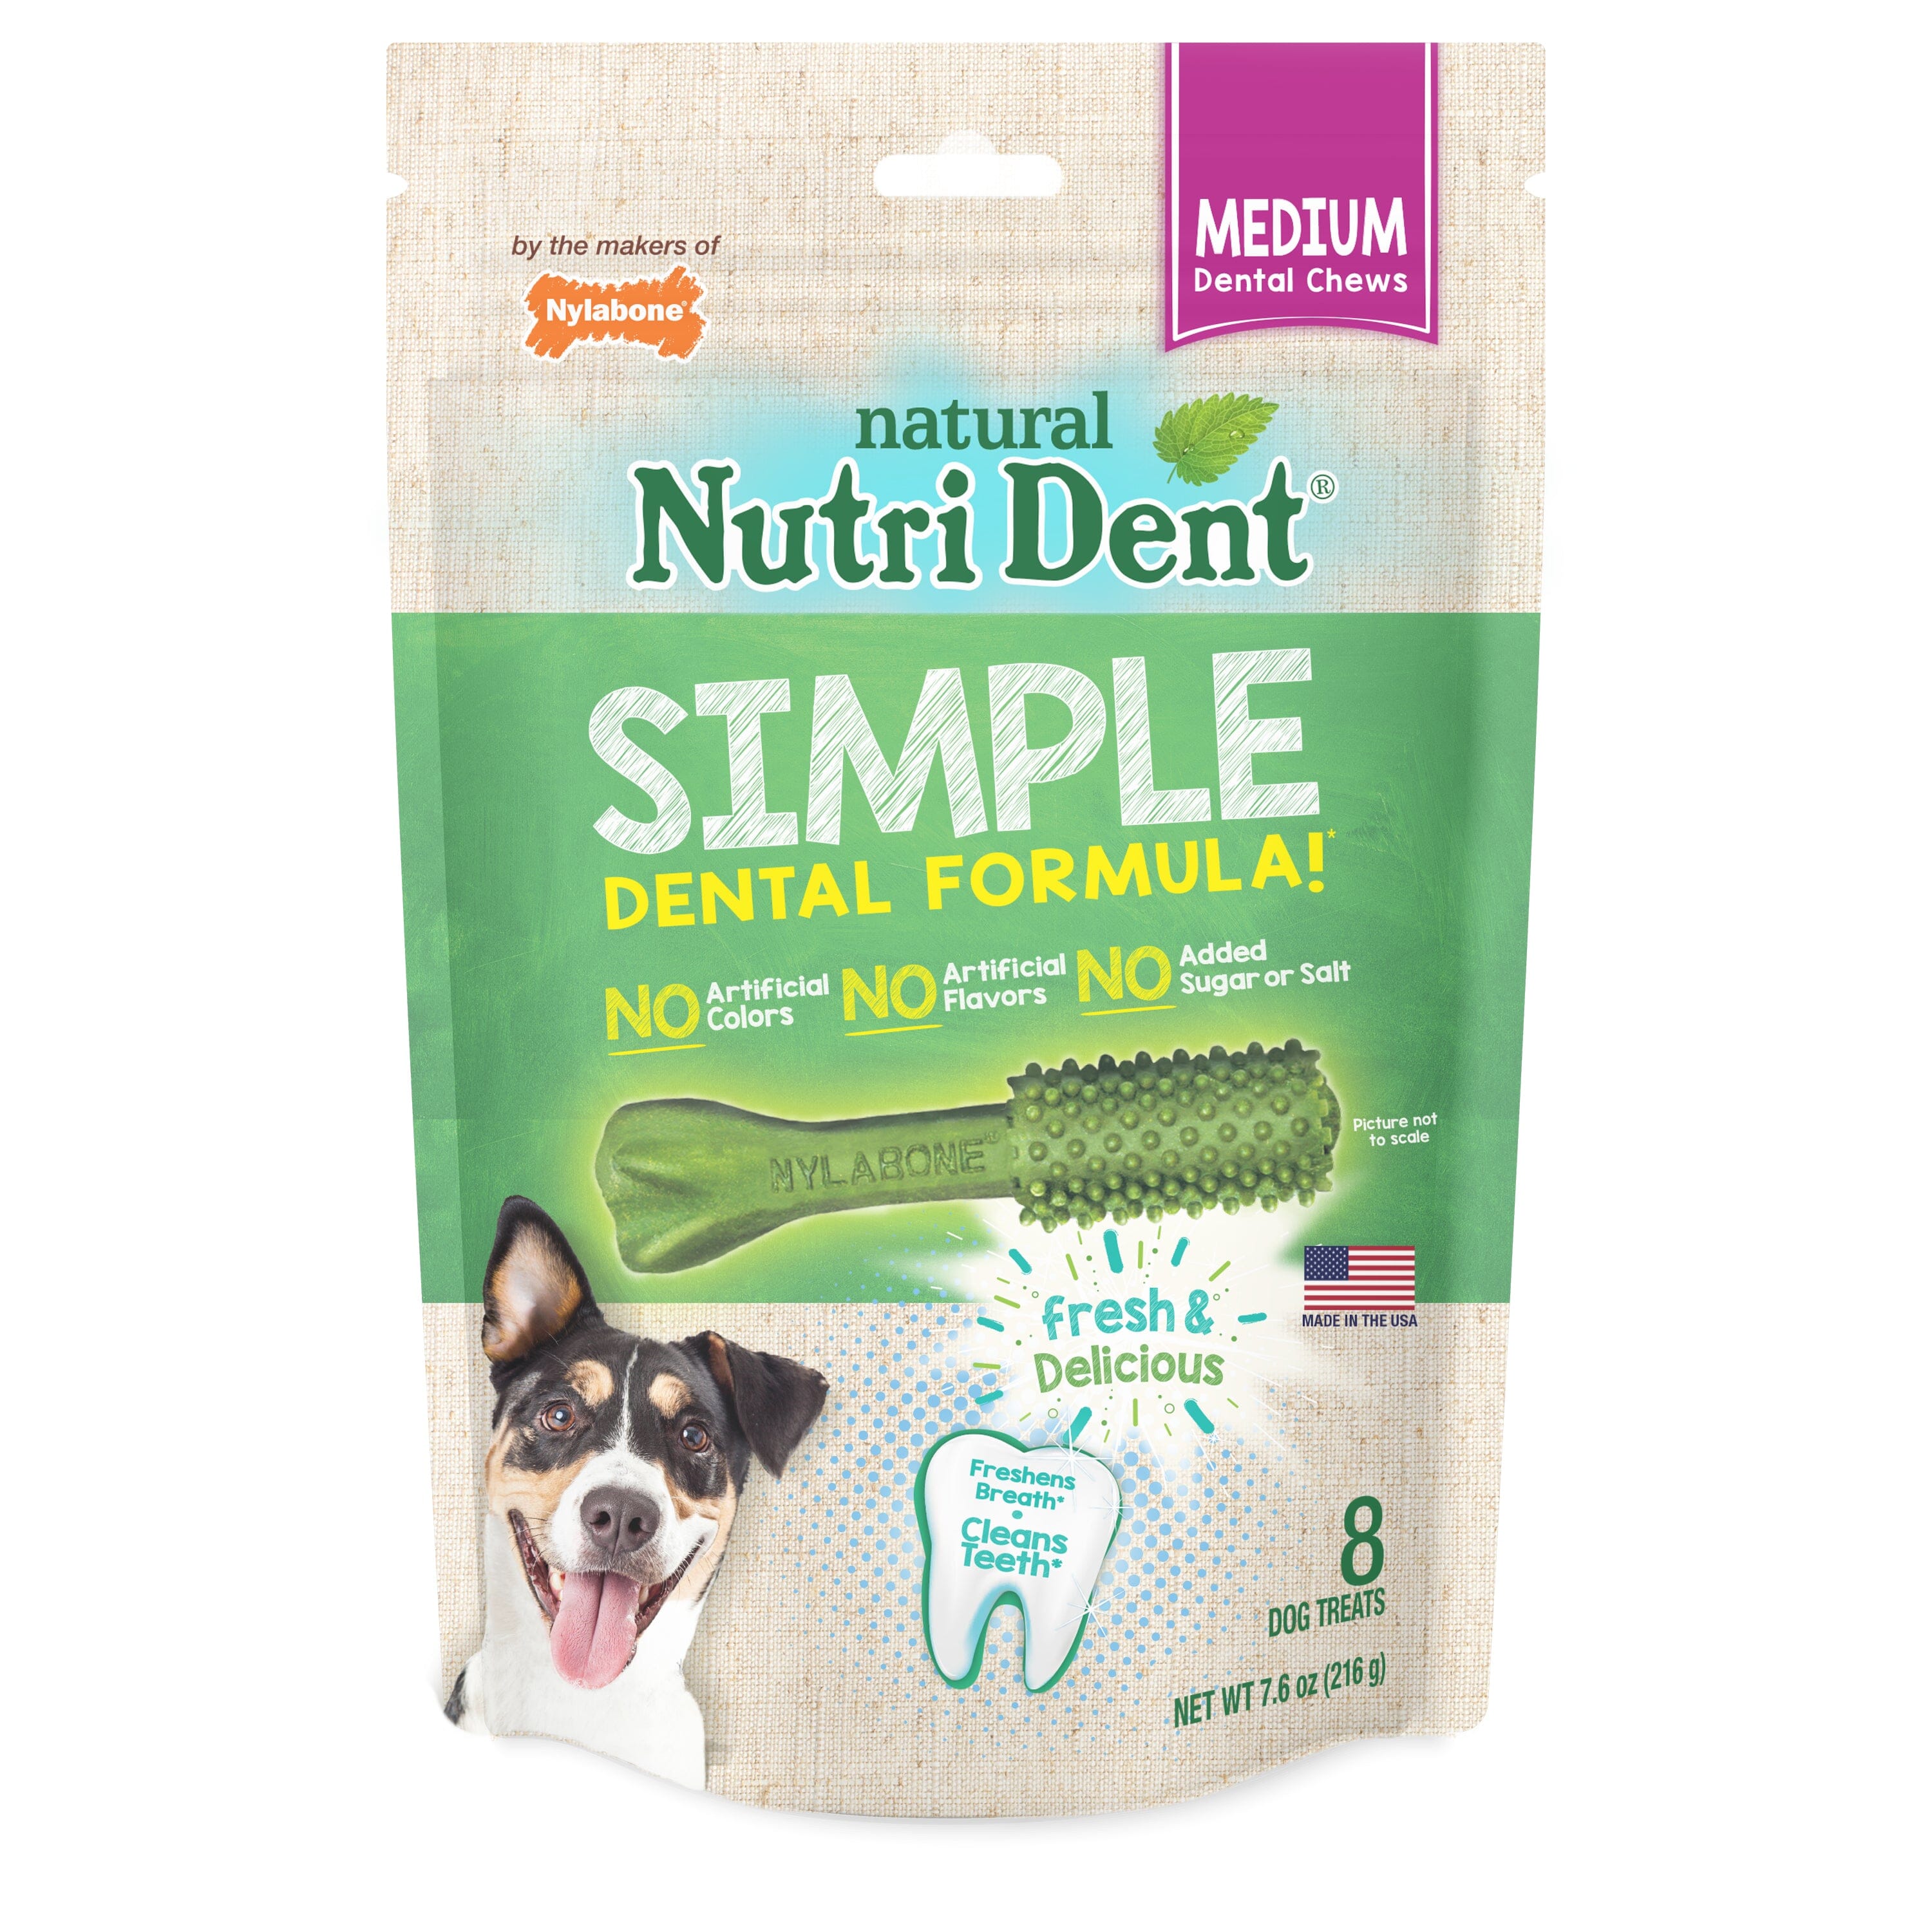 Nylabone Nutri Dent SIMPLE Natural Dental Fresh Breath Flavored Chew Treats - Medium - 8 Count  